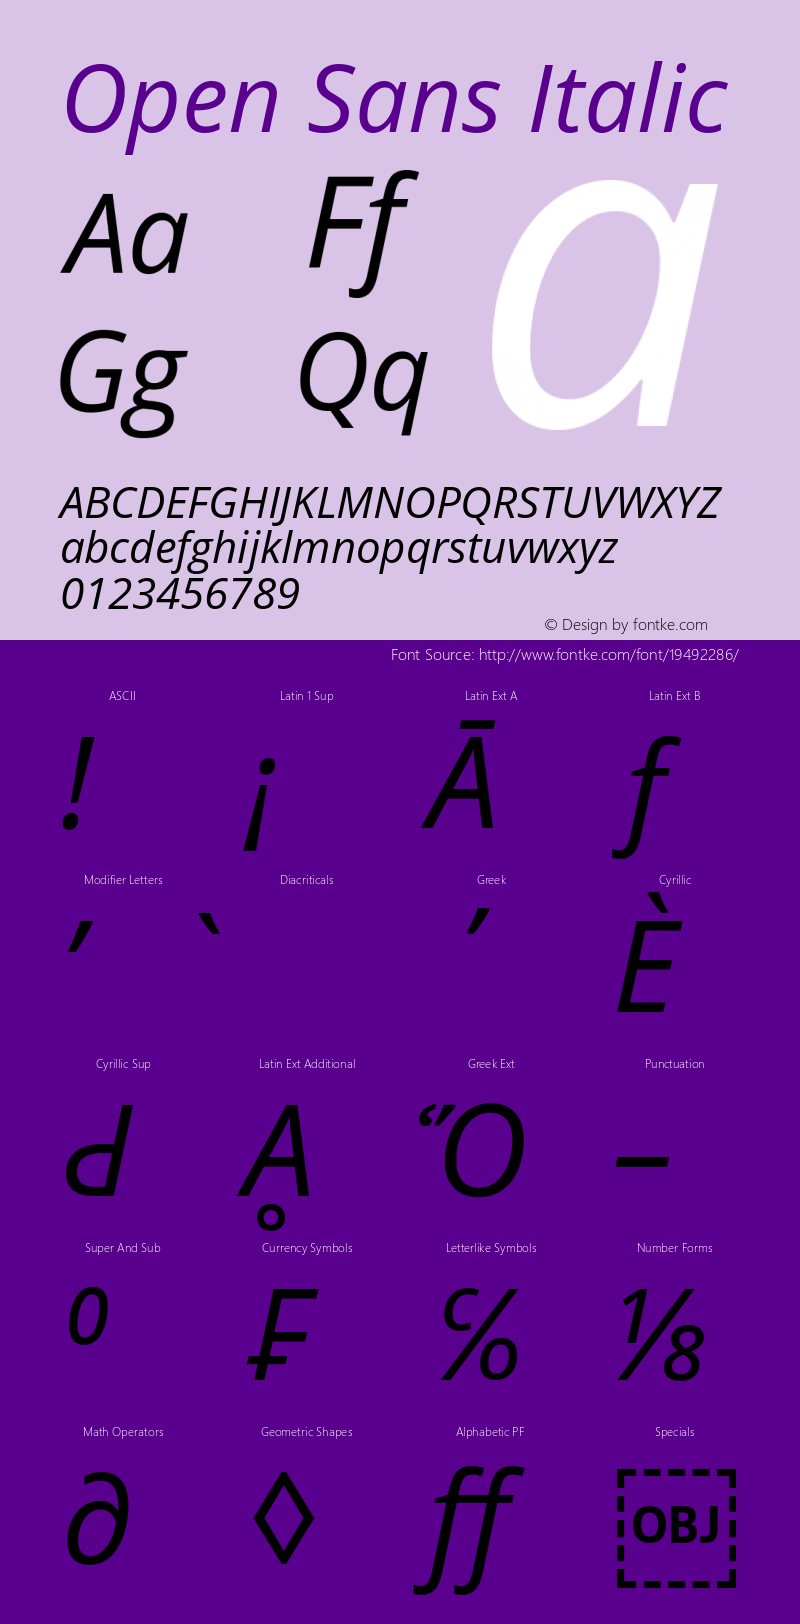 Open Sans Italic Version 1.10 Font Sample